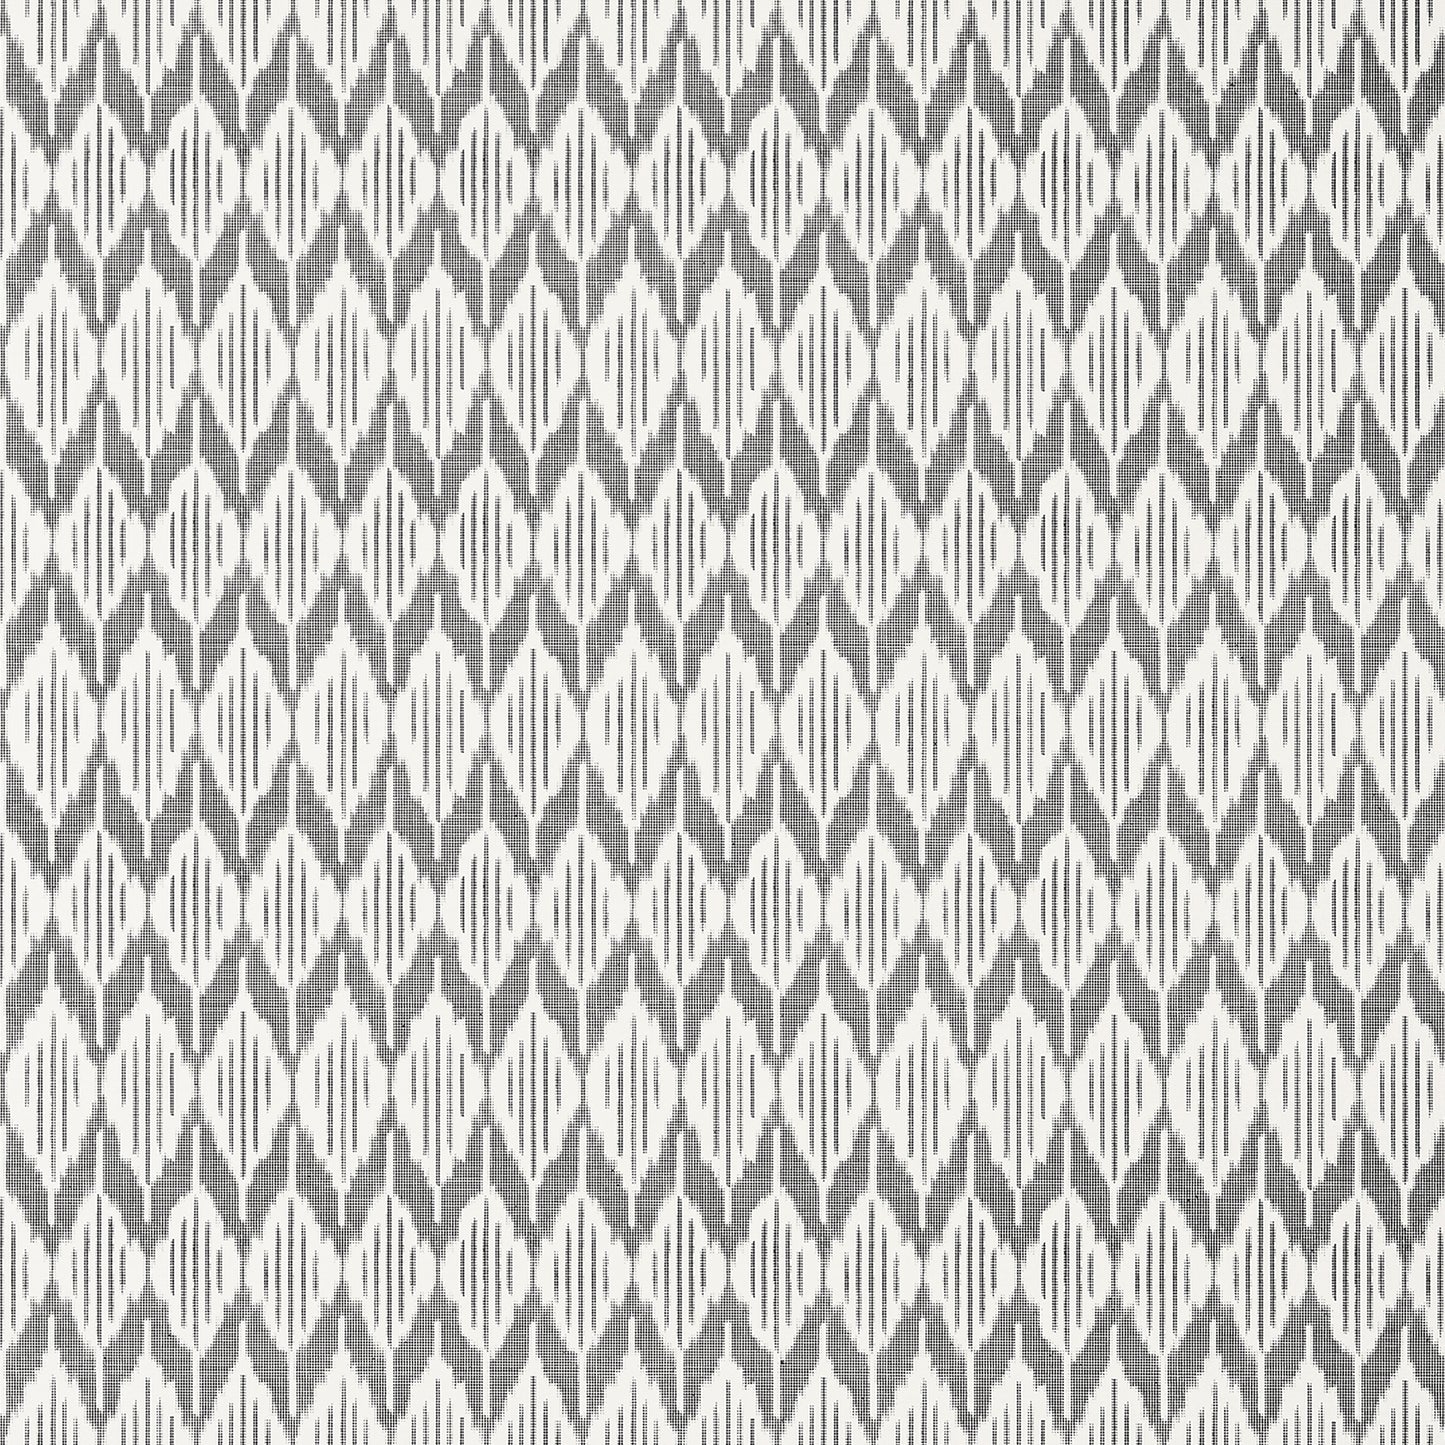 Purchase  Ann French Wallpaper Item# AT79133 pattern name  Balin Ikat